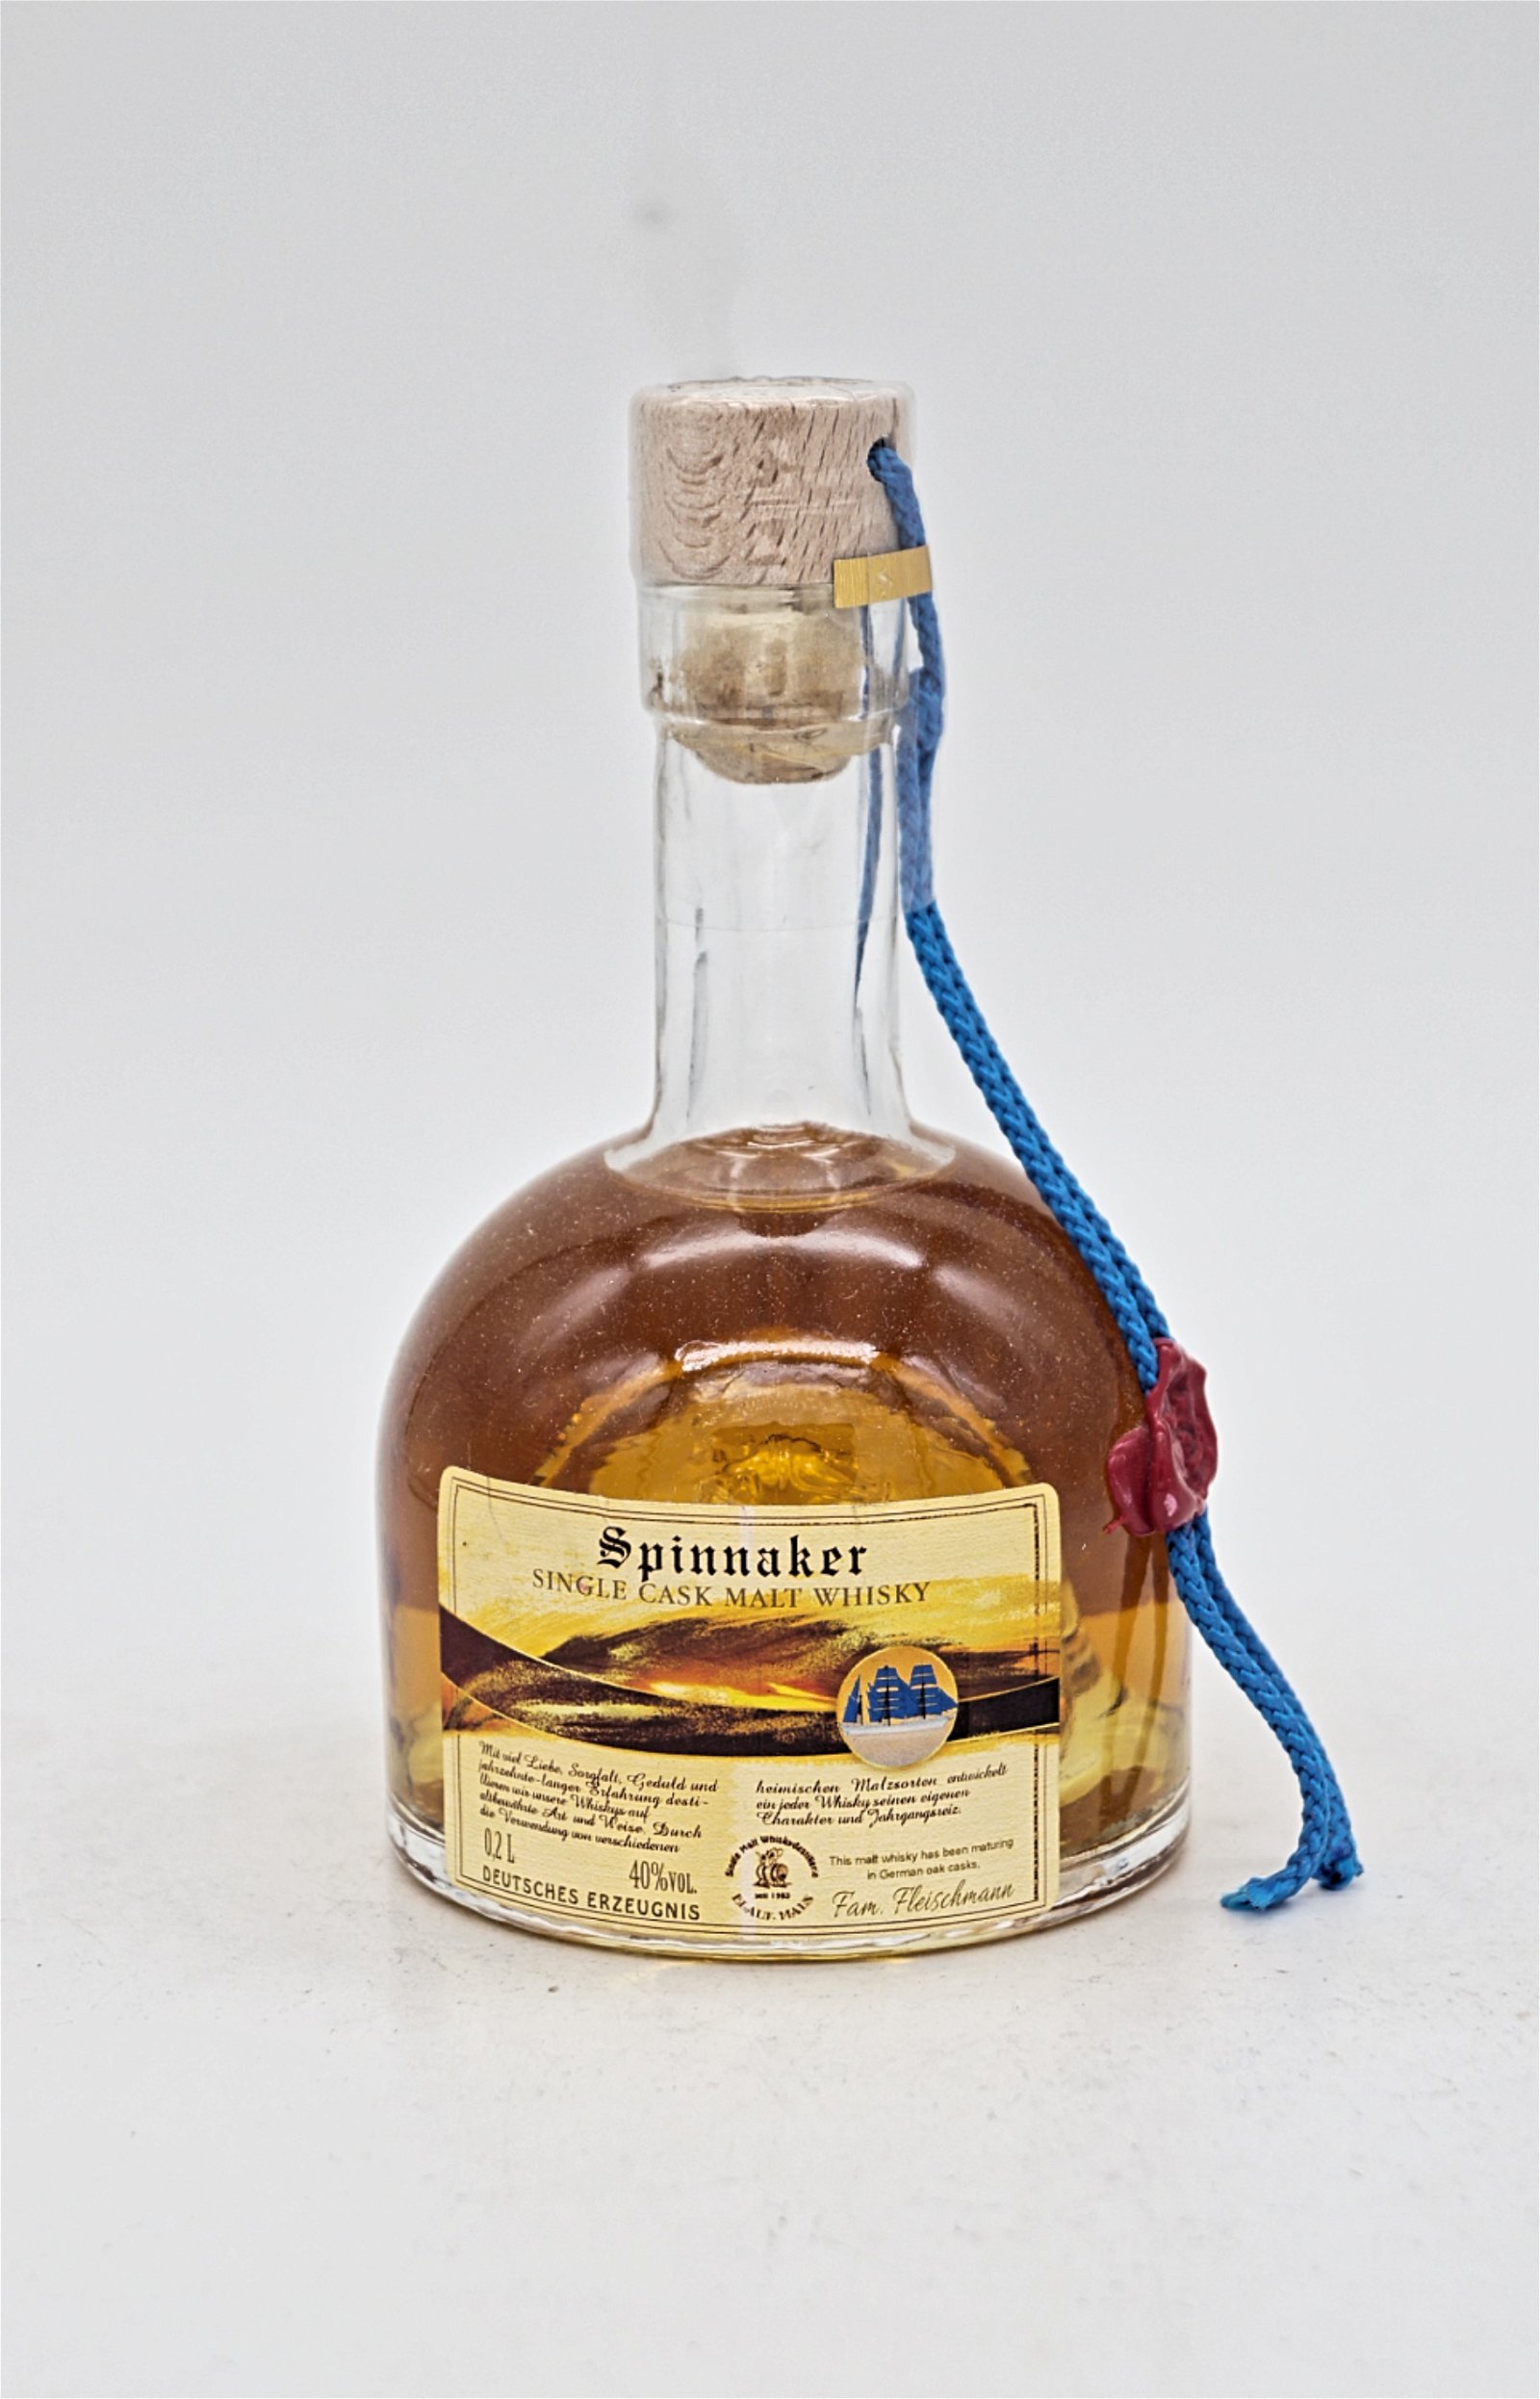 Blaue Maus Spinnaker Single Cask Malt Whisky 2008/2018